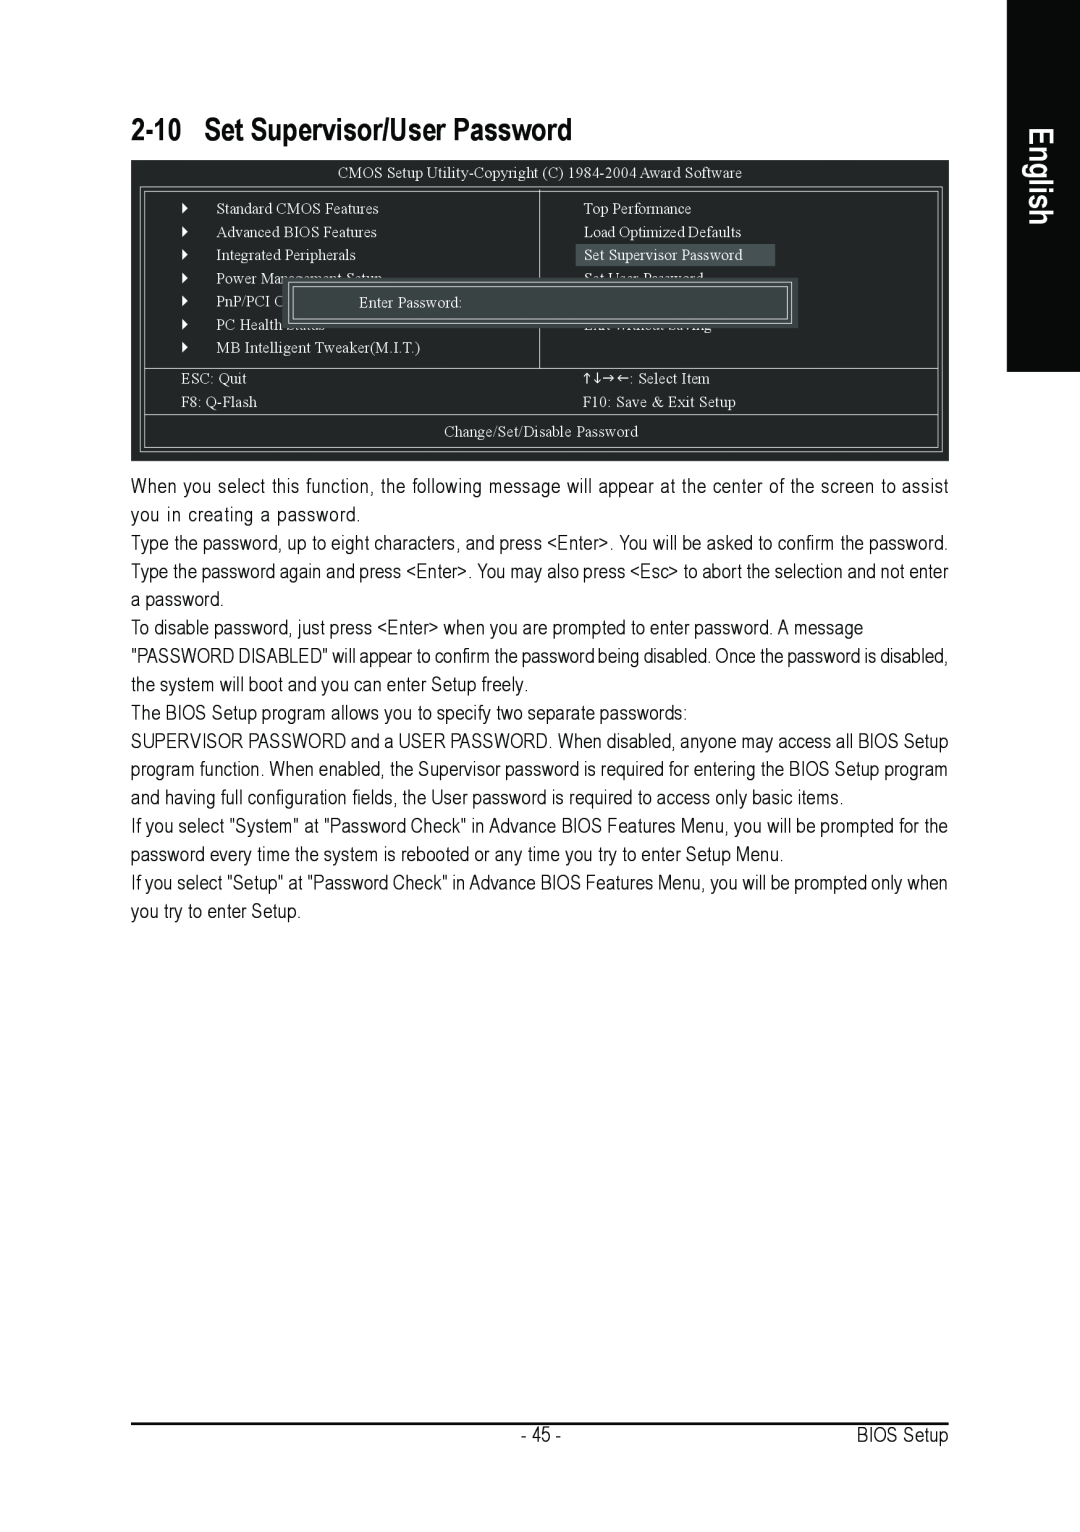 AMD GA-K8NSC-939 user manual 2-10, Set Supervisor/User Password, English 